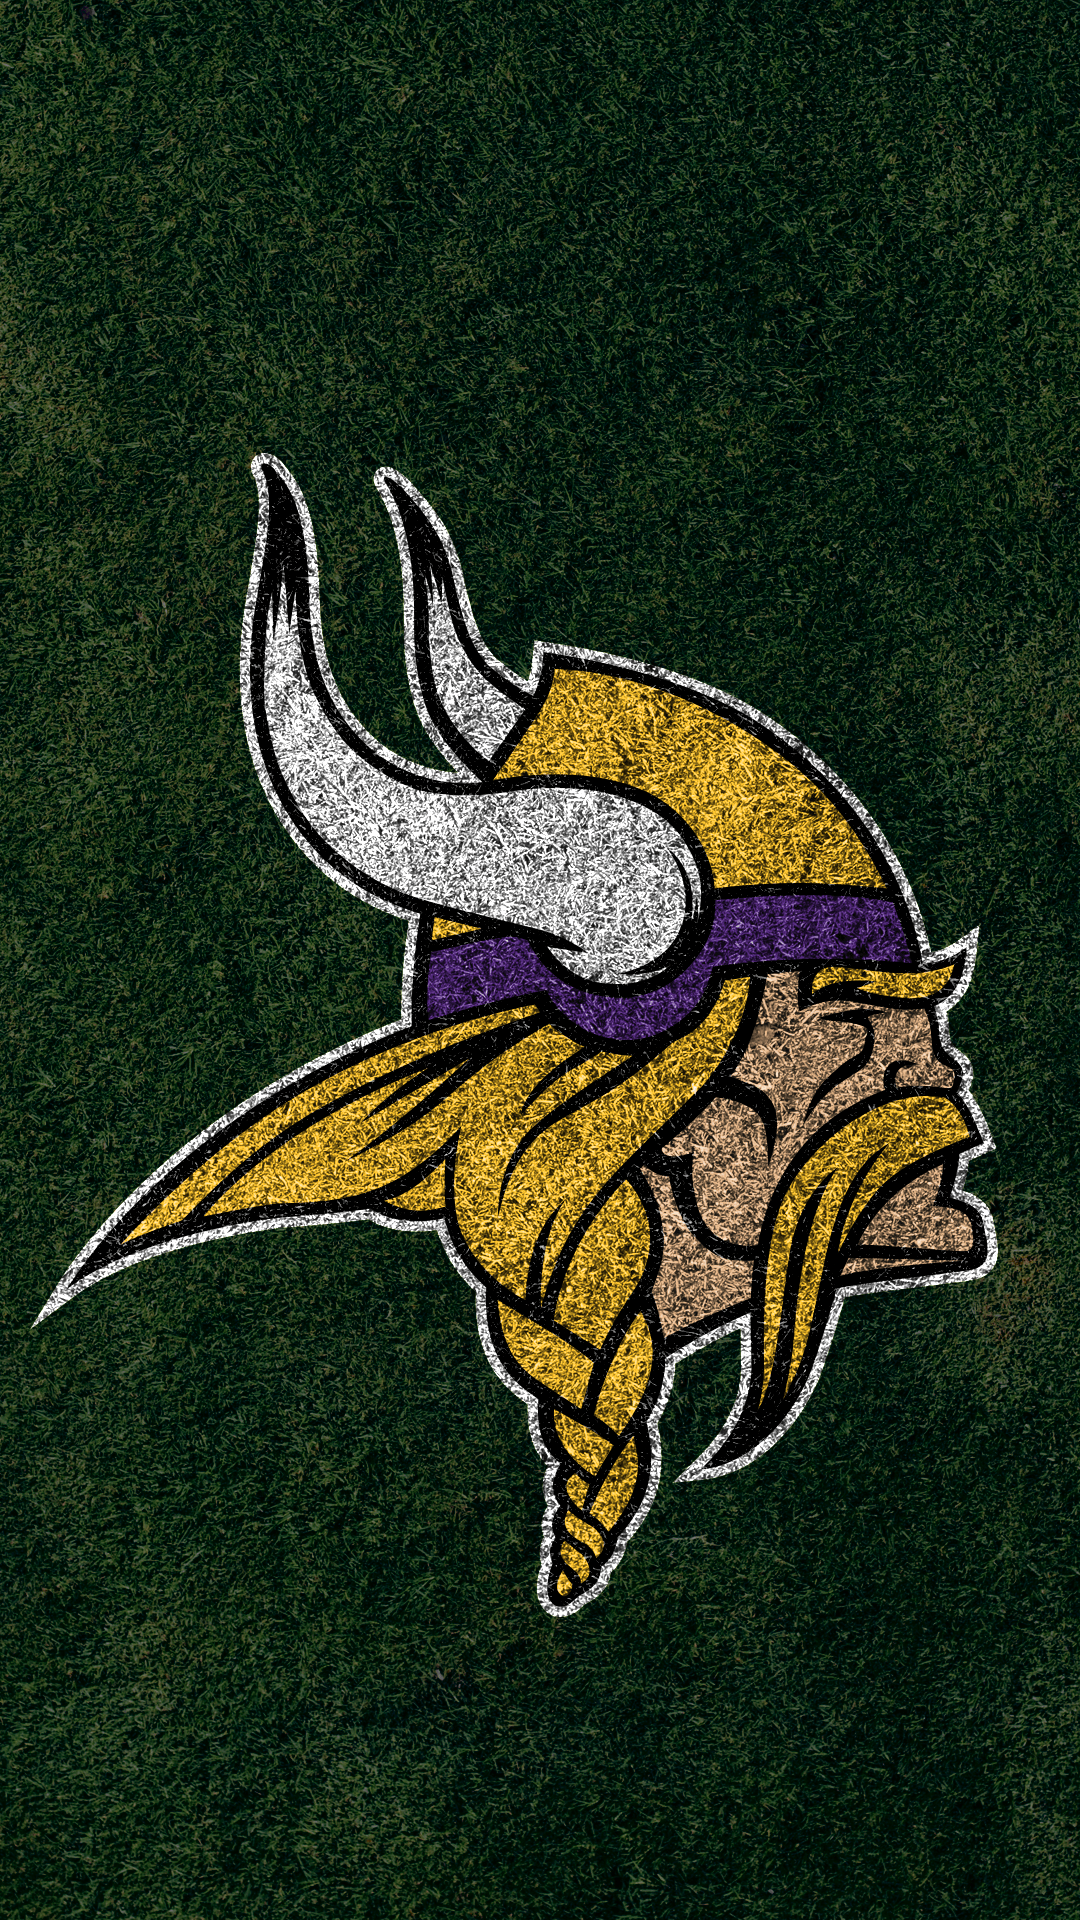 Minnesota Vikings Wallpaper. iPhone. Android